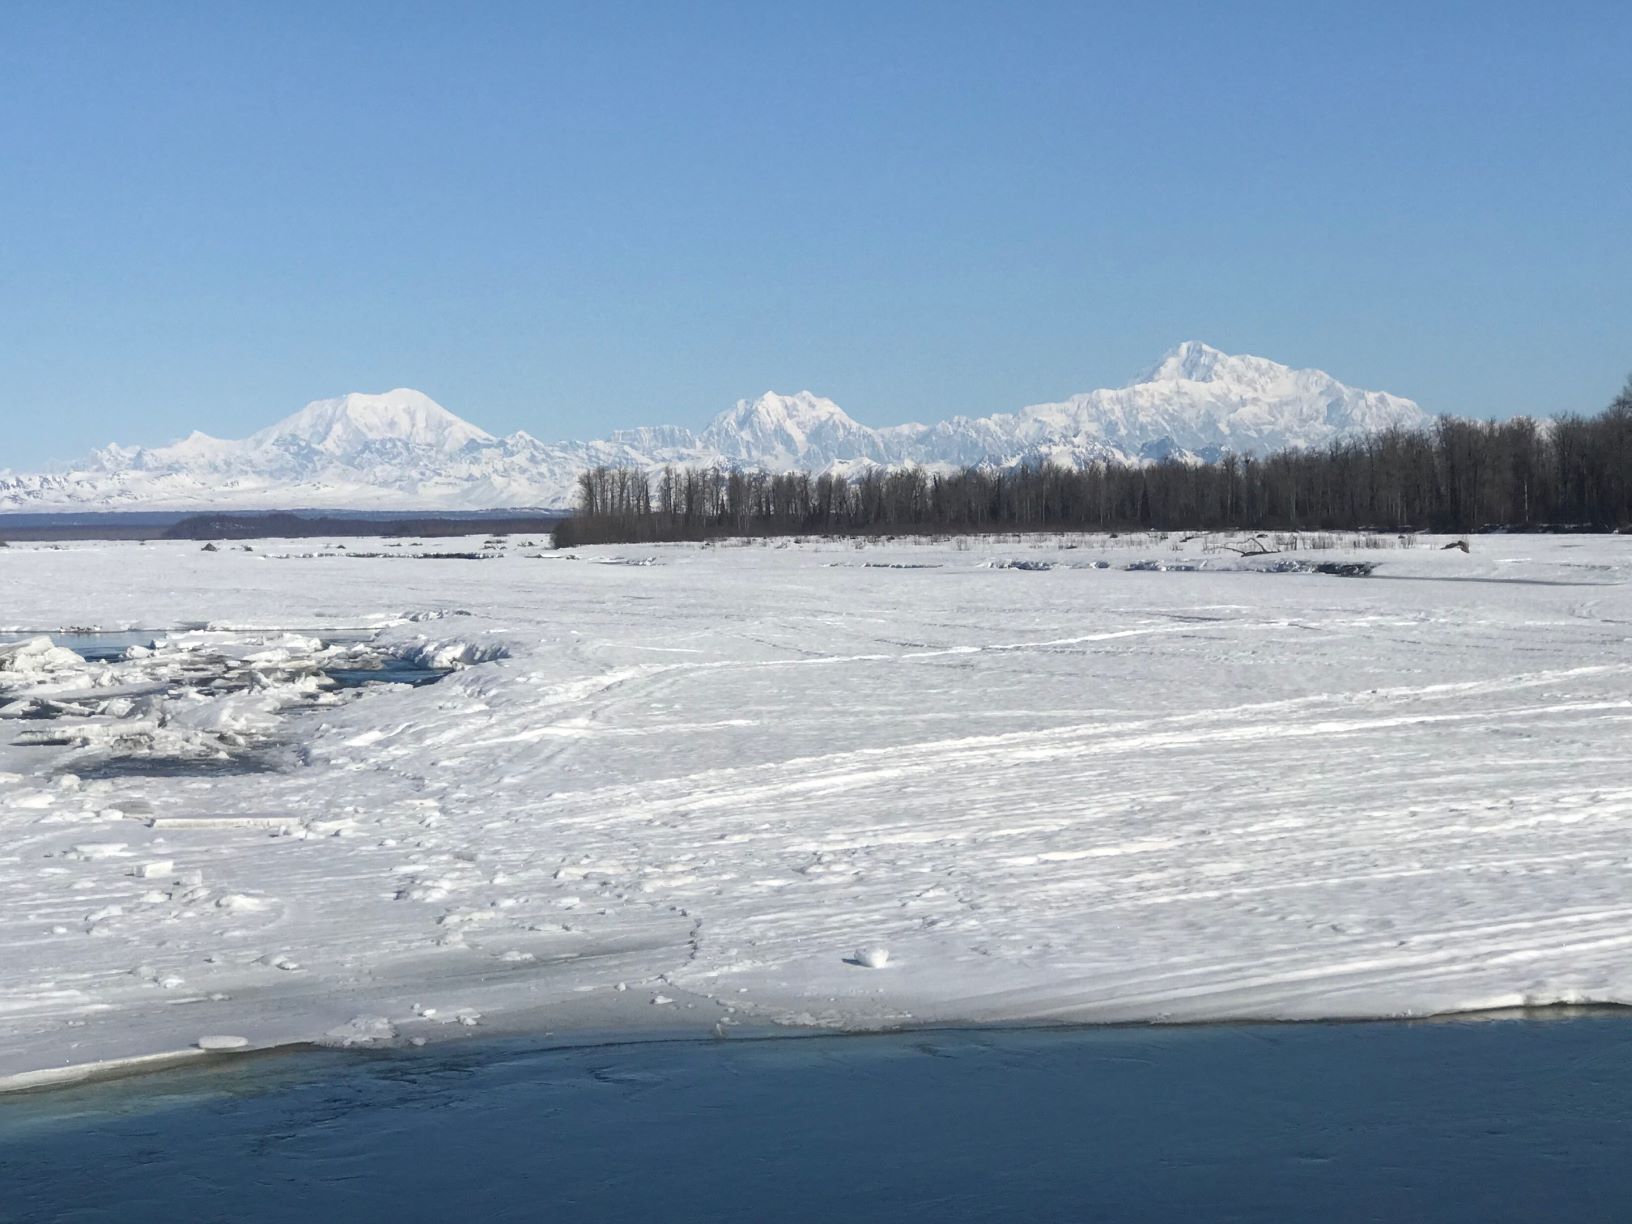 View of Mount Foraker, Hunter, and Denali from the still frozen Talkeetna River